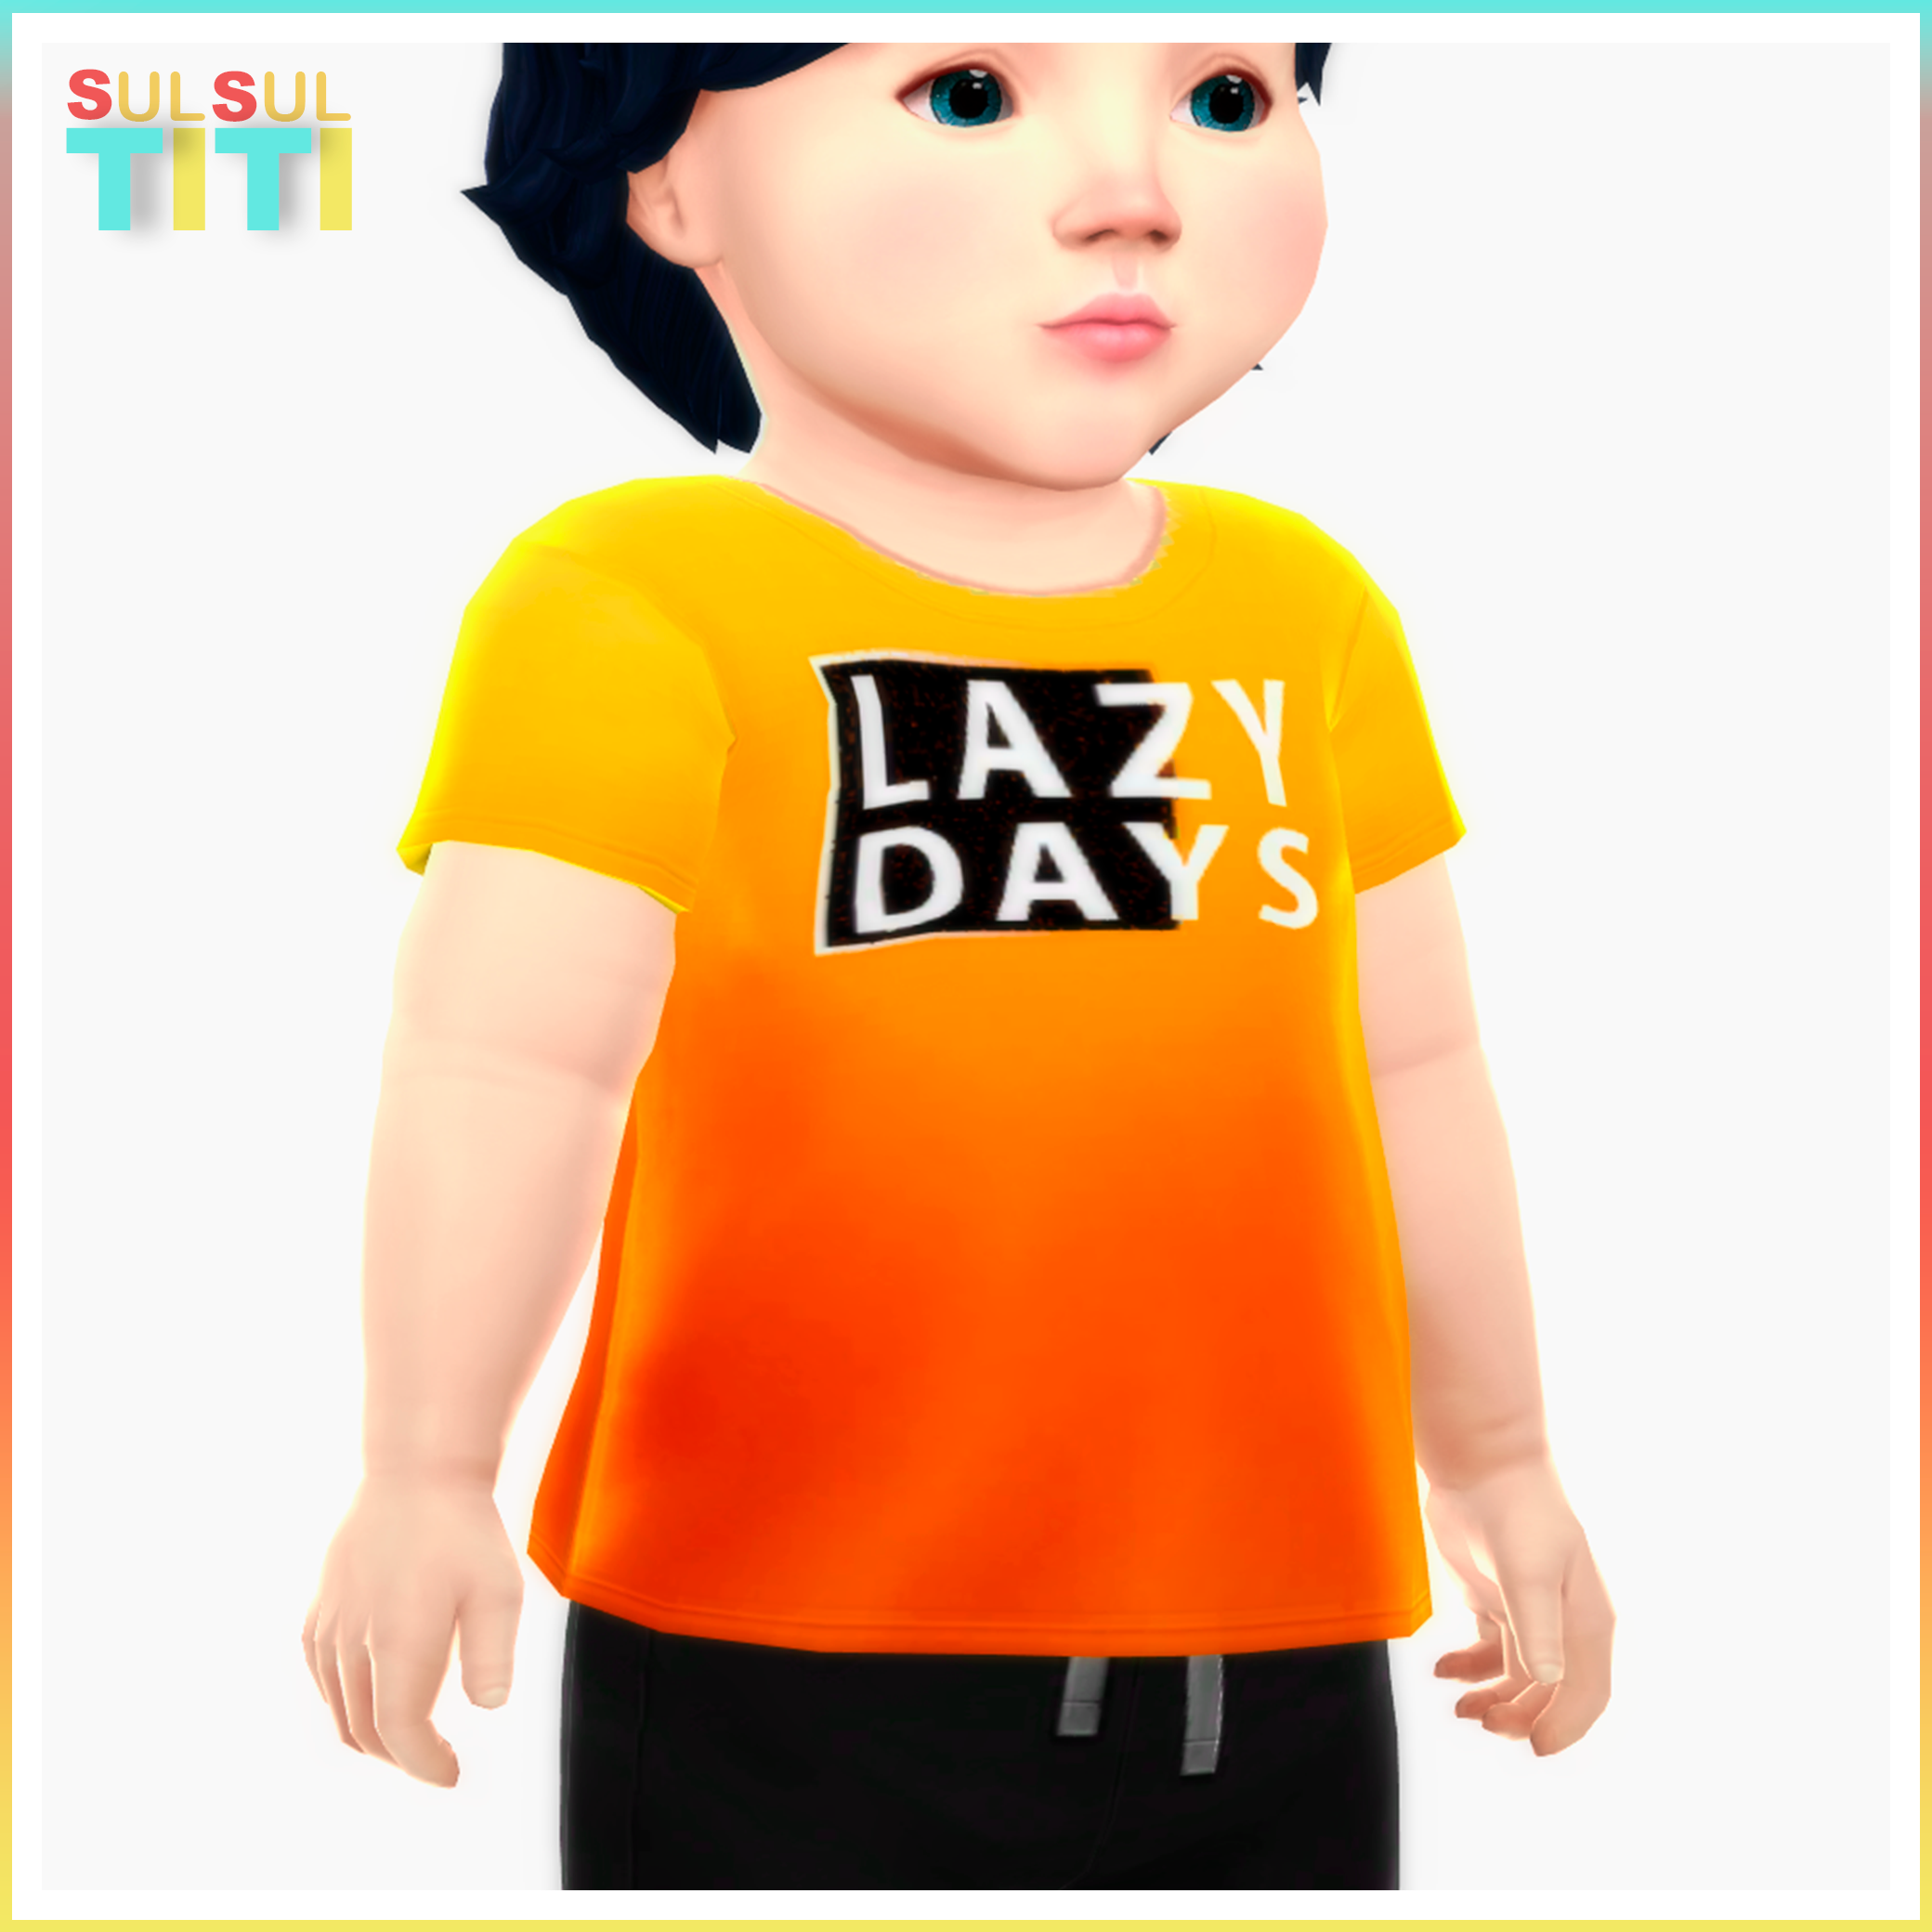 Lazy Days - T-Shirt Infant - The Sims 4 Create a Sim - CurseForge